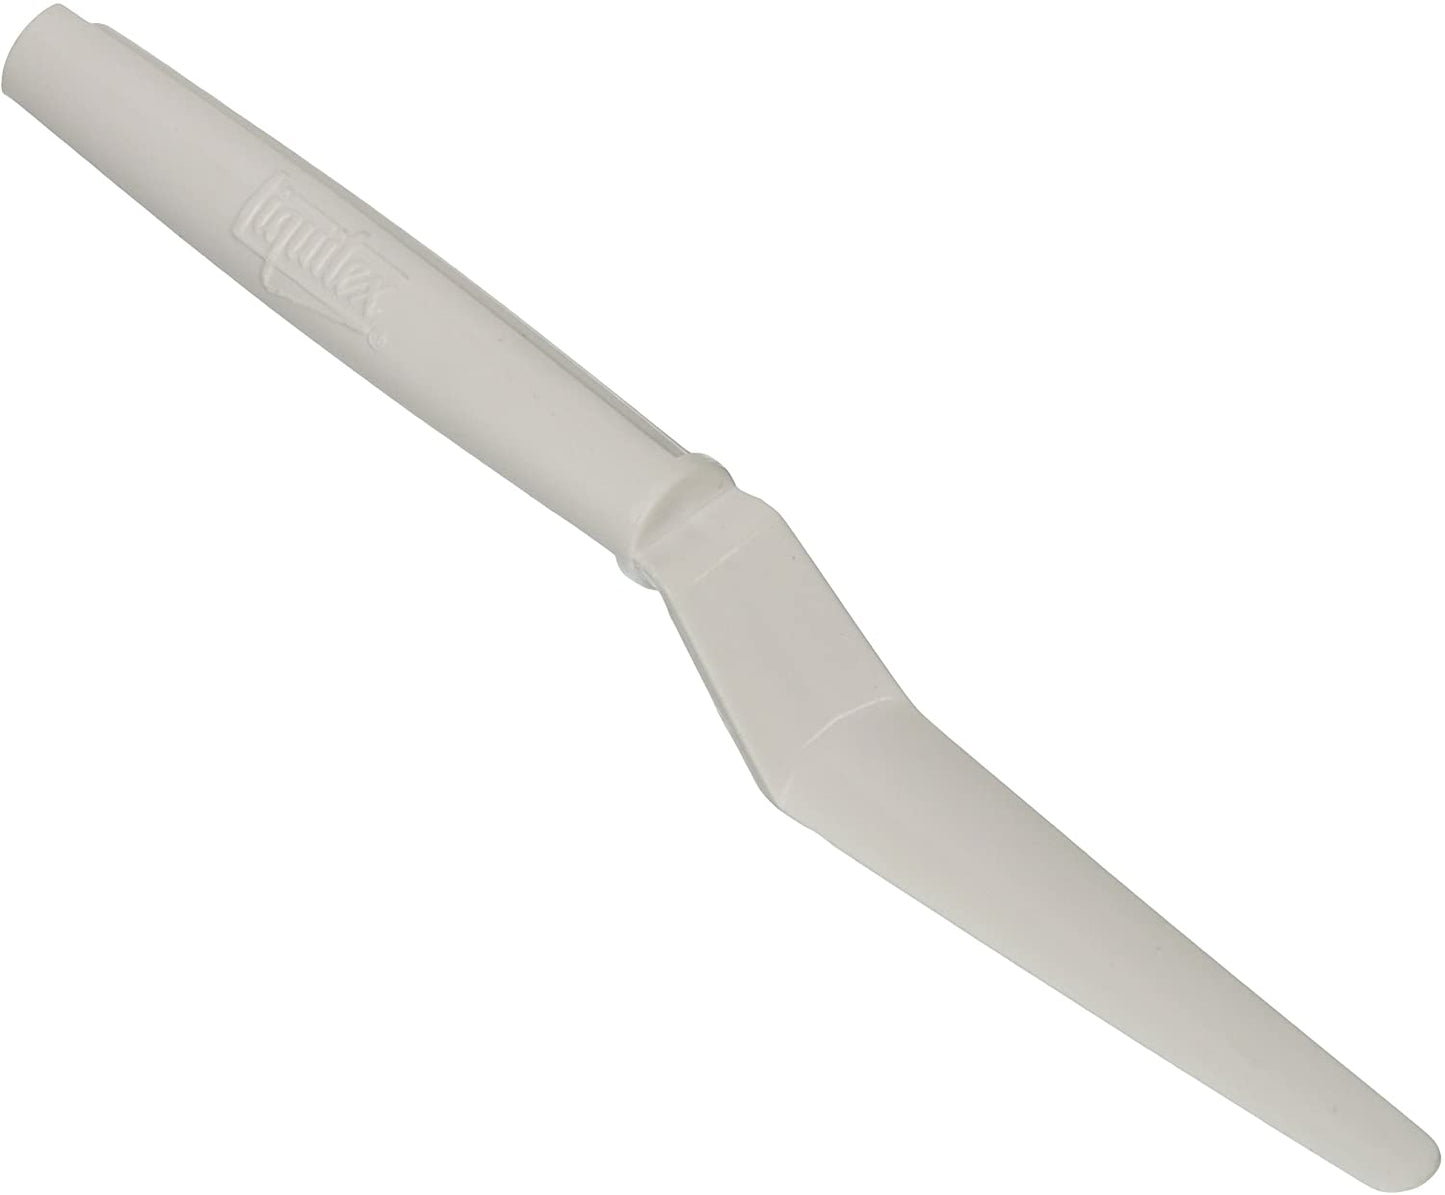 Liquitex Basics Plastic Palette Knife - 3 inch trowel - by Liquitex - K. A. Artist Shop